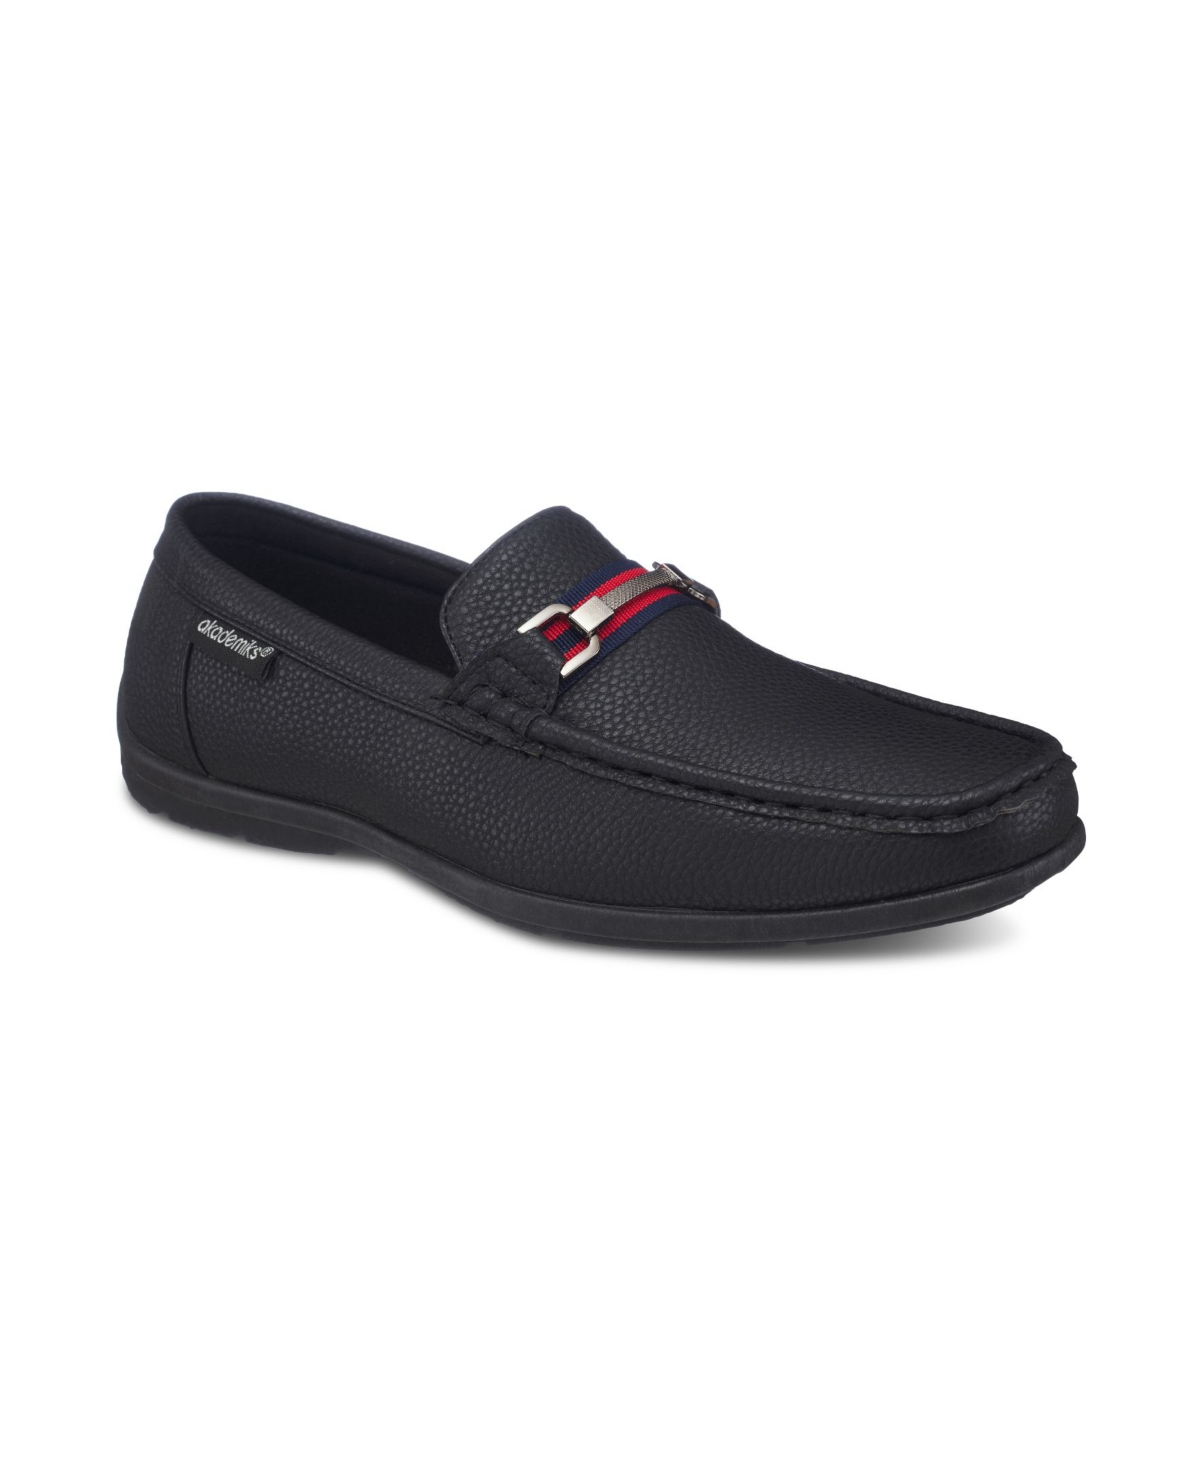 Akademiks Men's Slip-on Moccasin Loafers Men's Shoes In Black